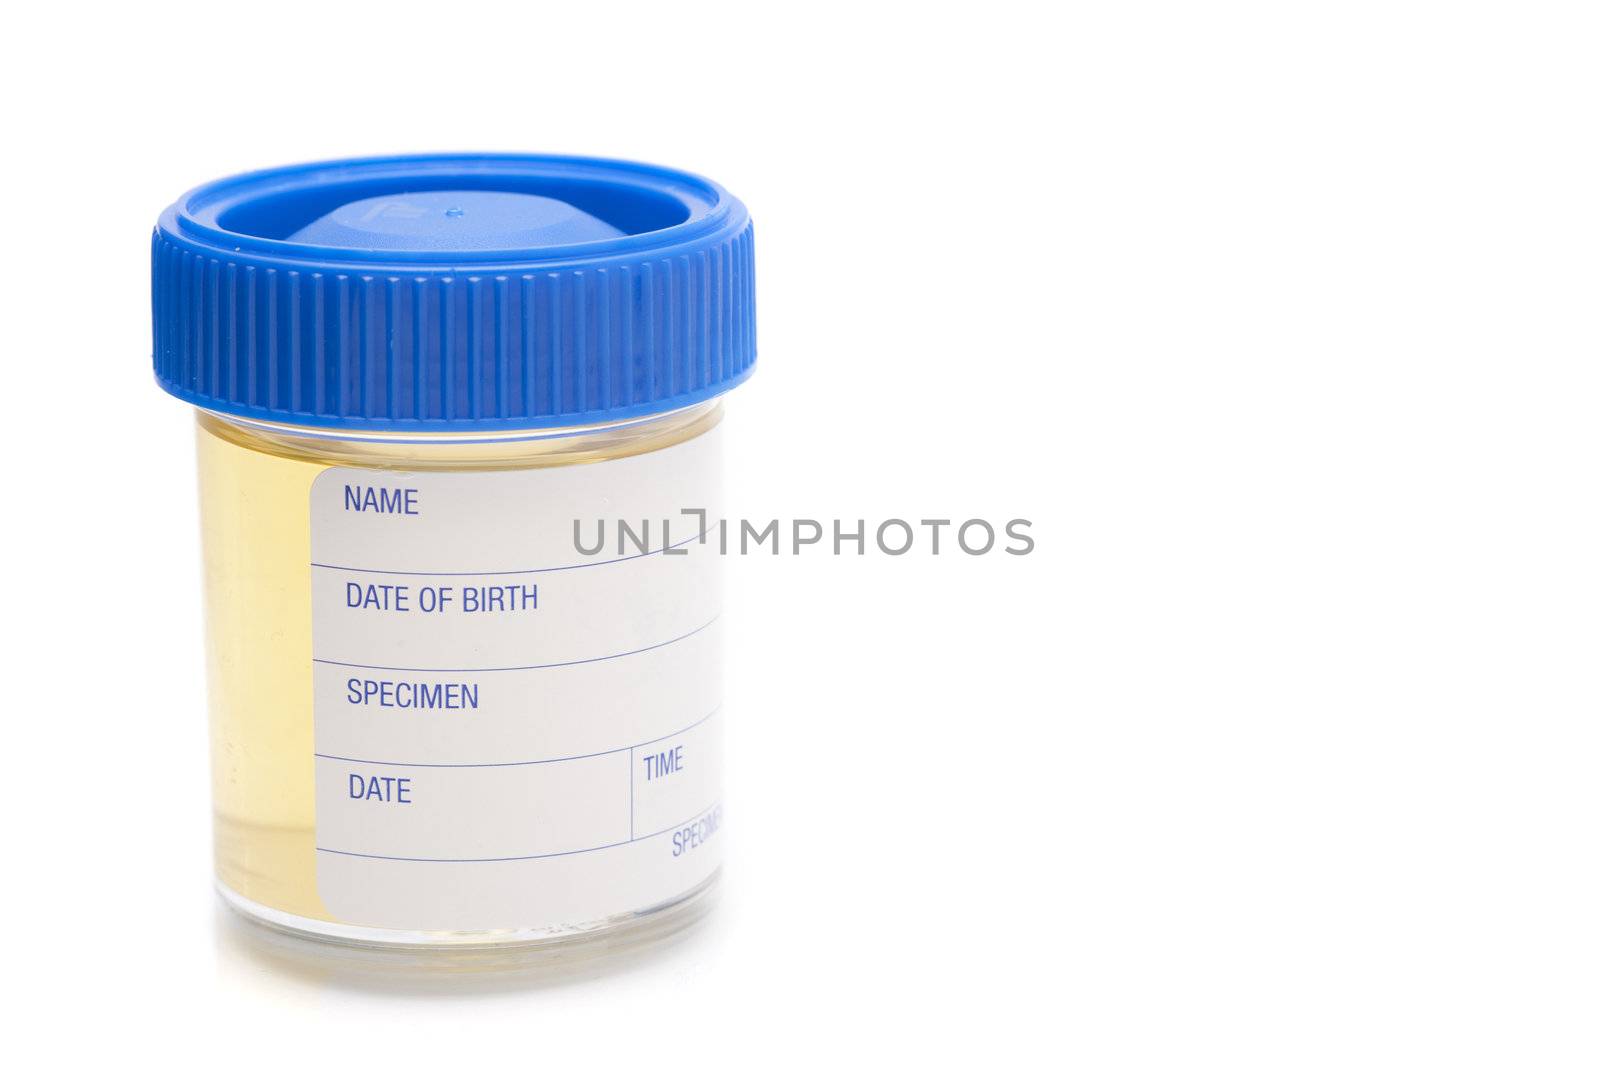 pathology test sample jar containing a urine specimen